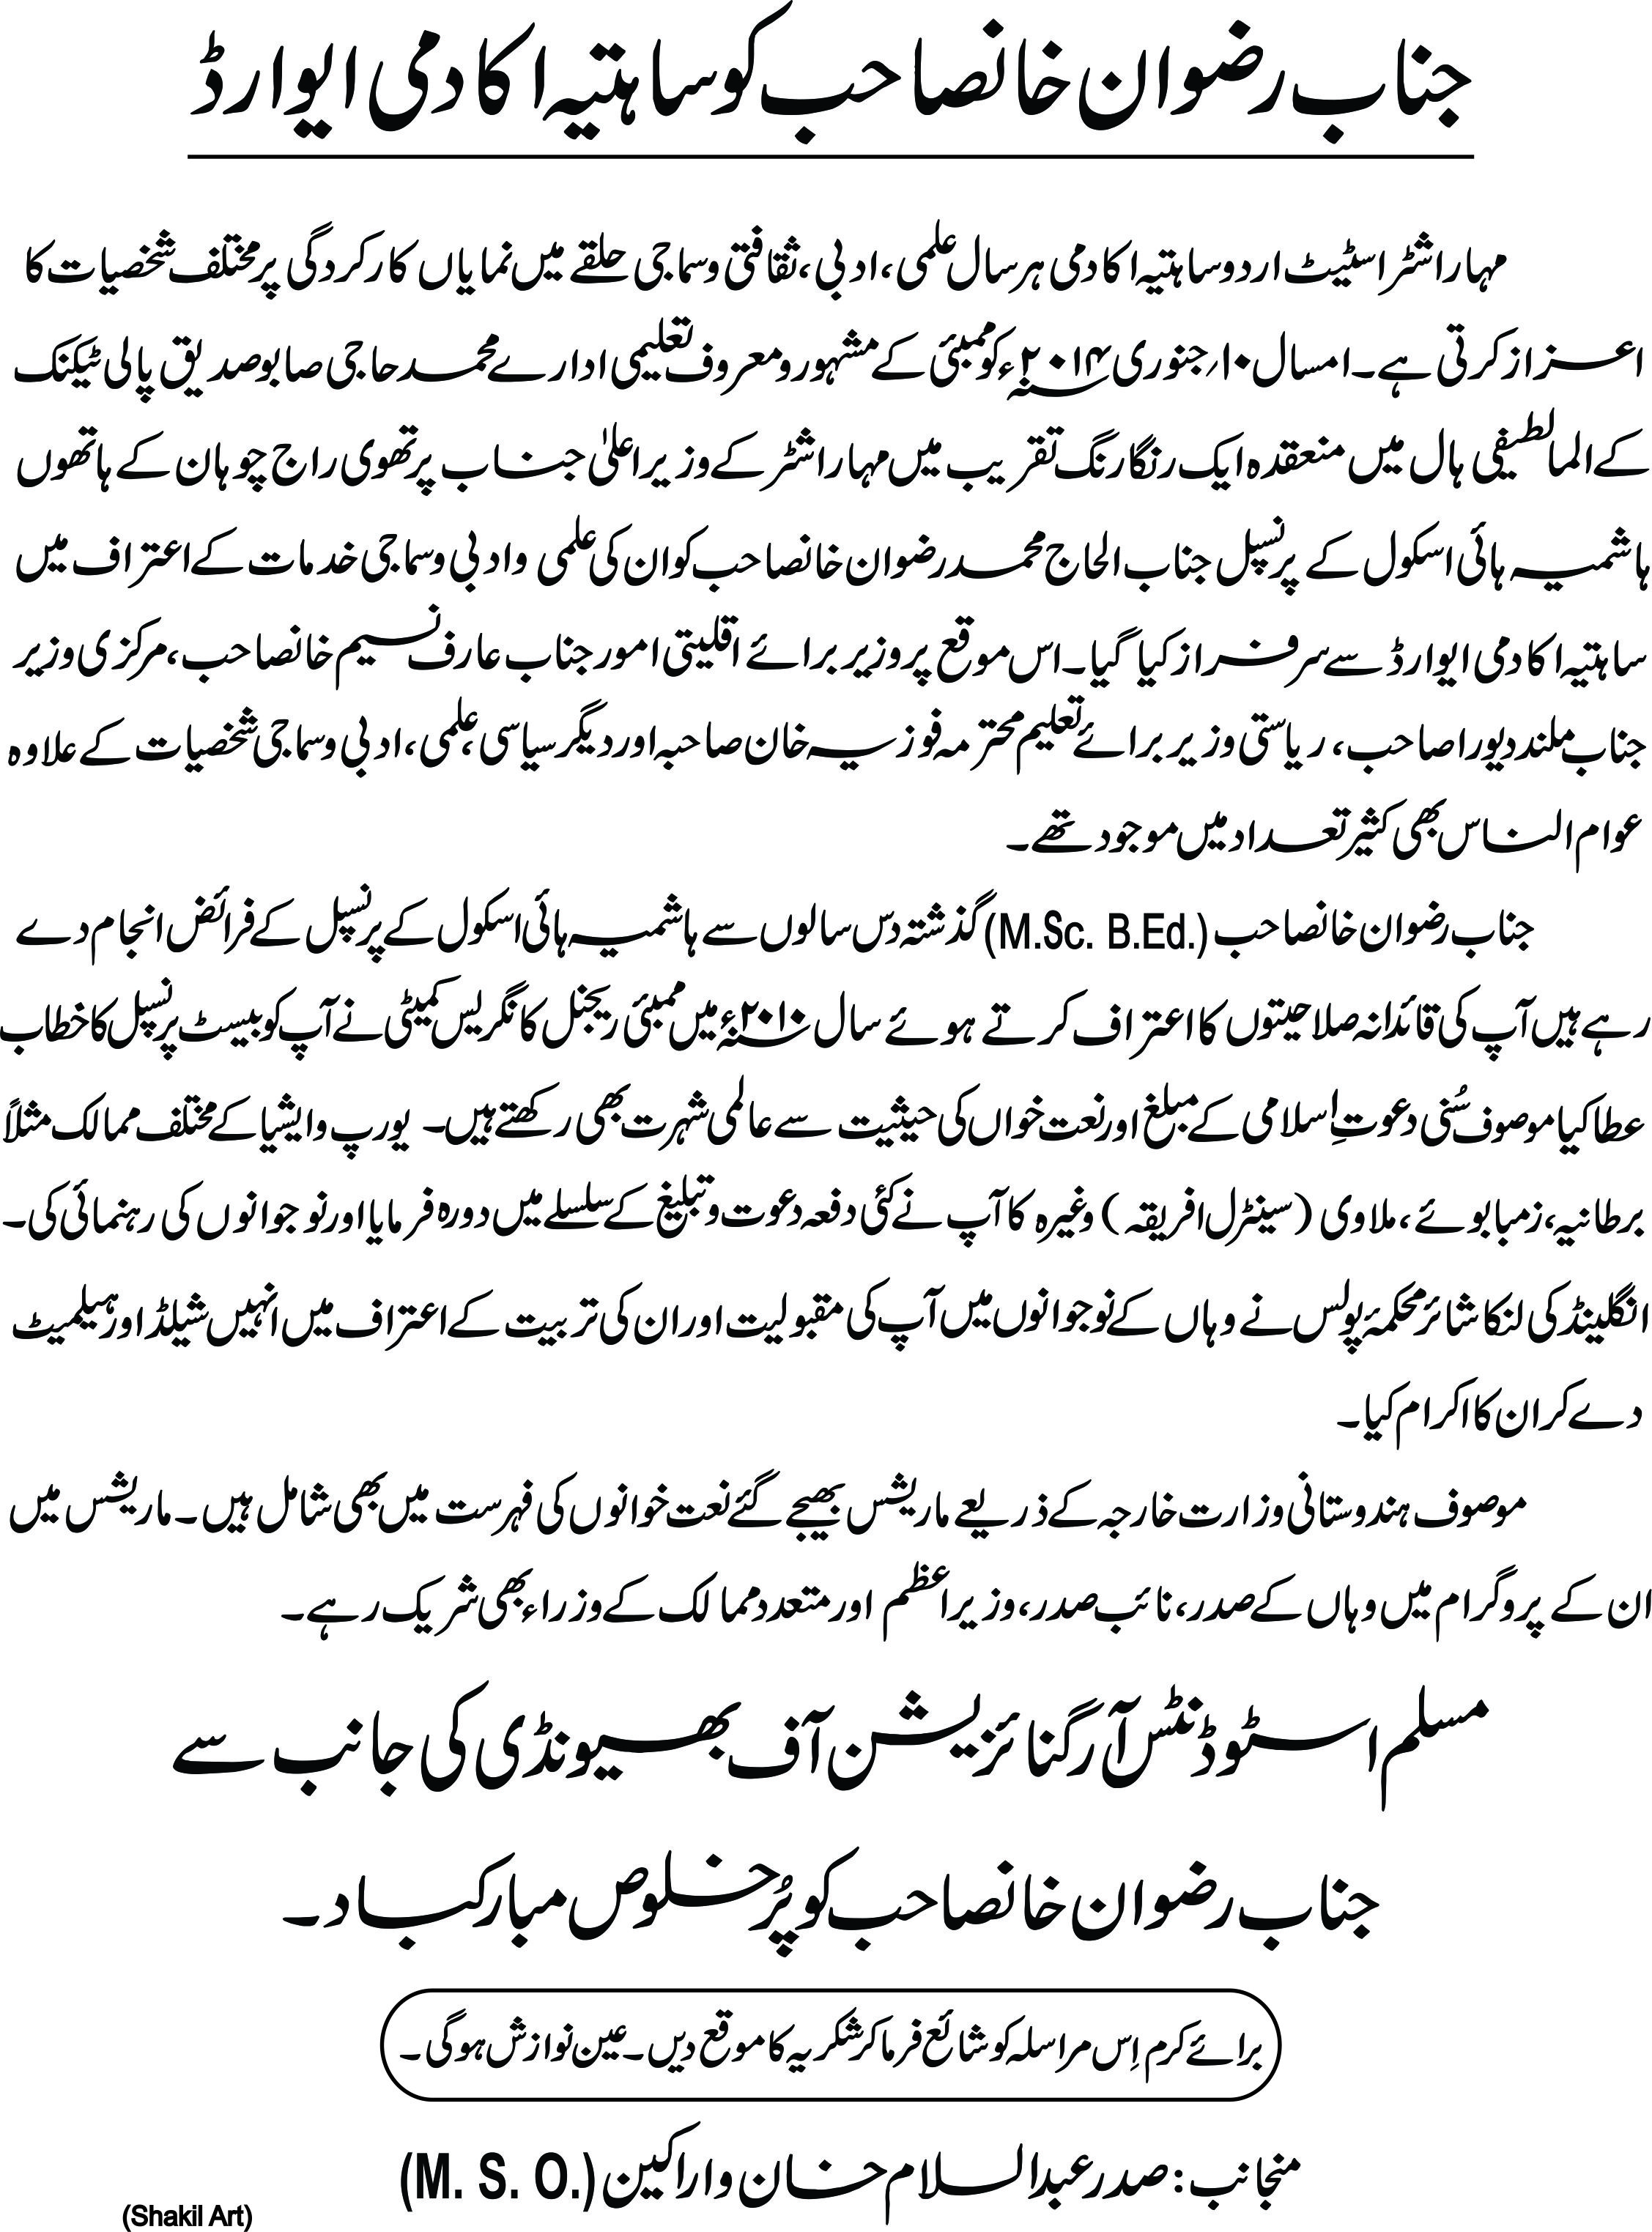 Essay for terrorism in pakistan